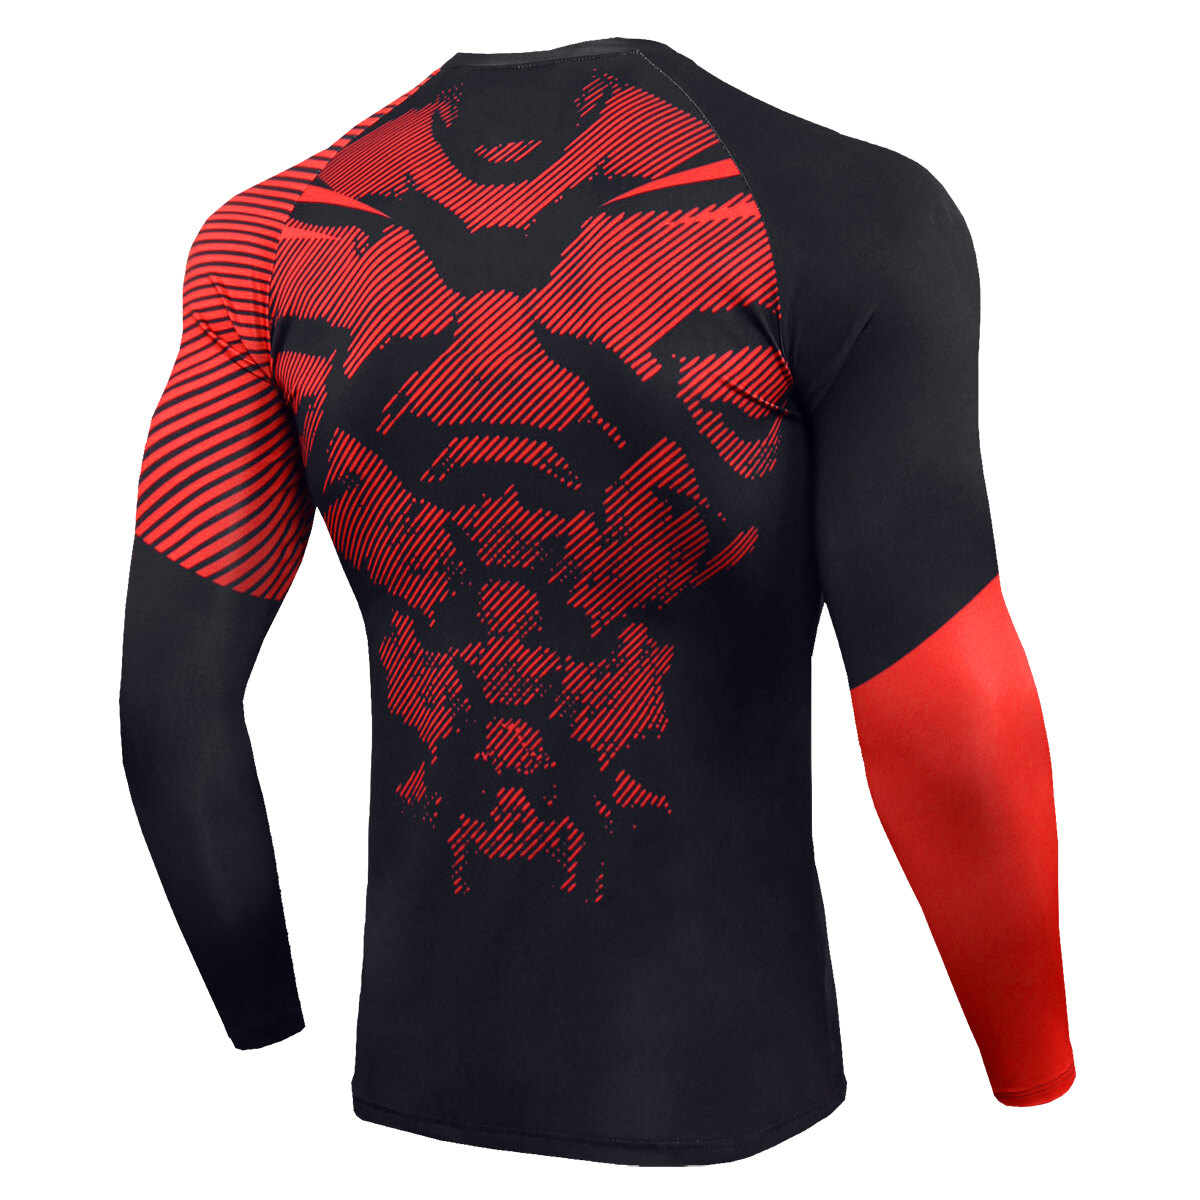 Men’s Long Sleeve Muscle Gym Shirts Red - PKAWAY